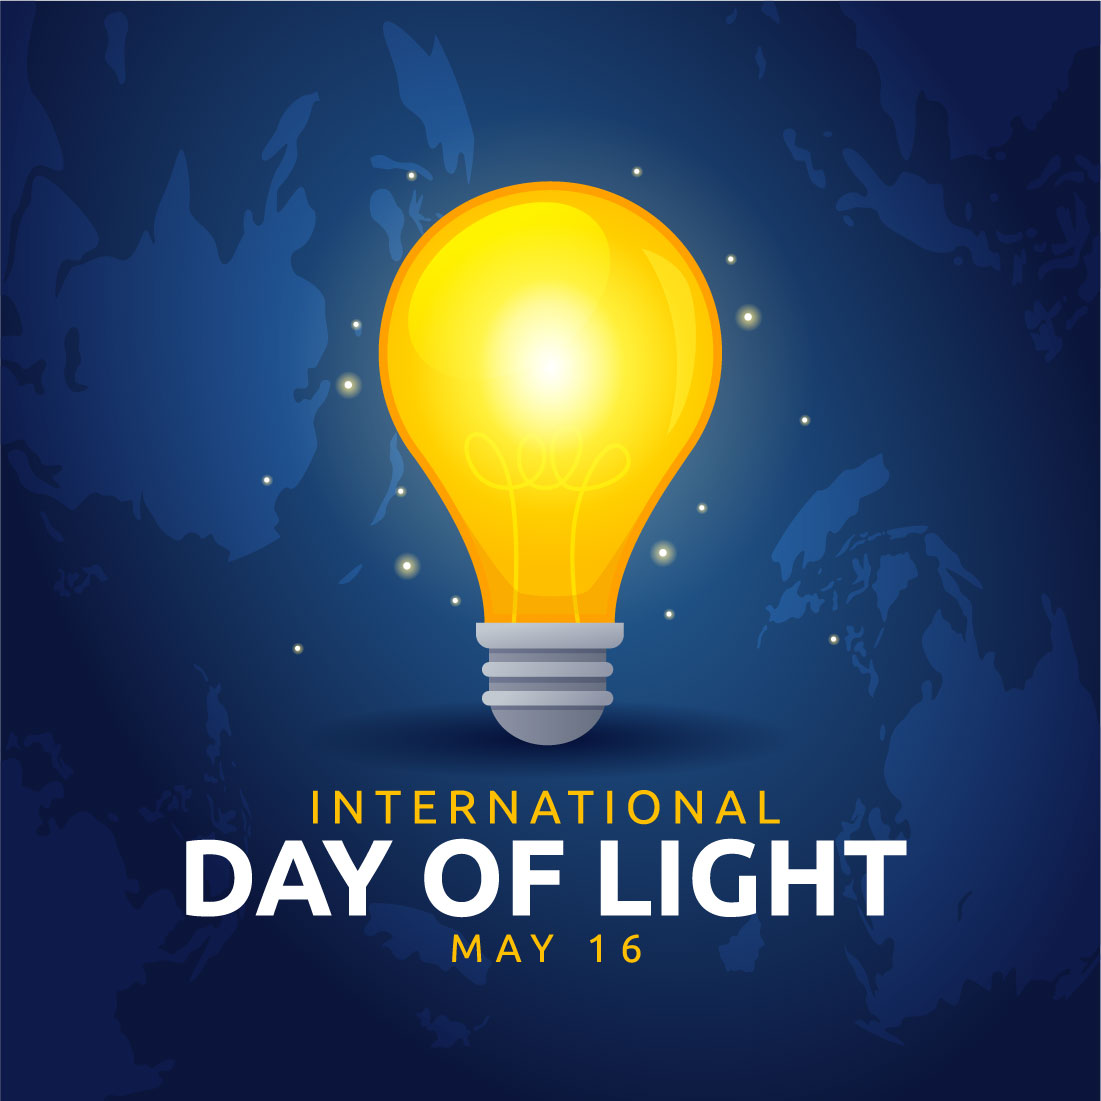 15 International Day of Light Illustration cover image.